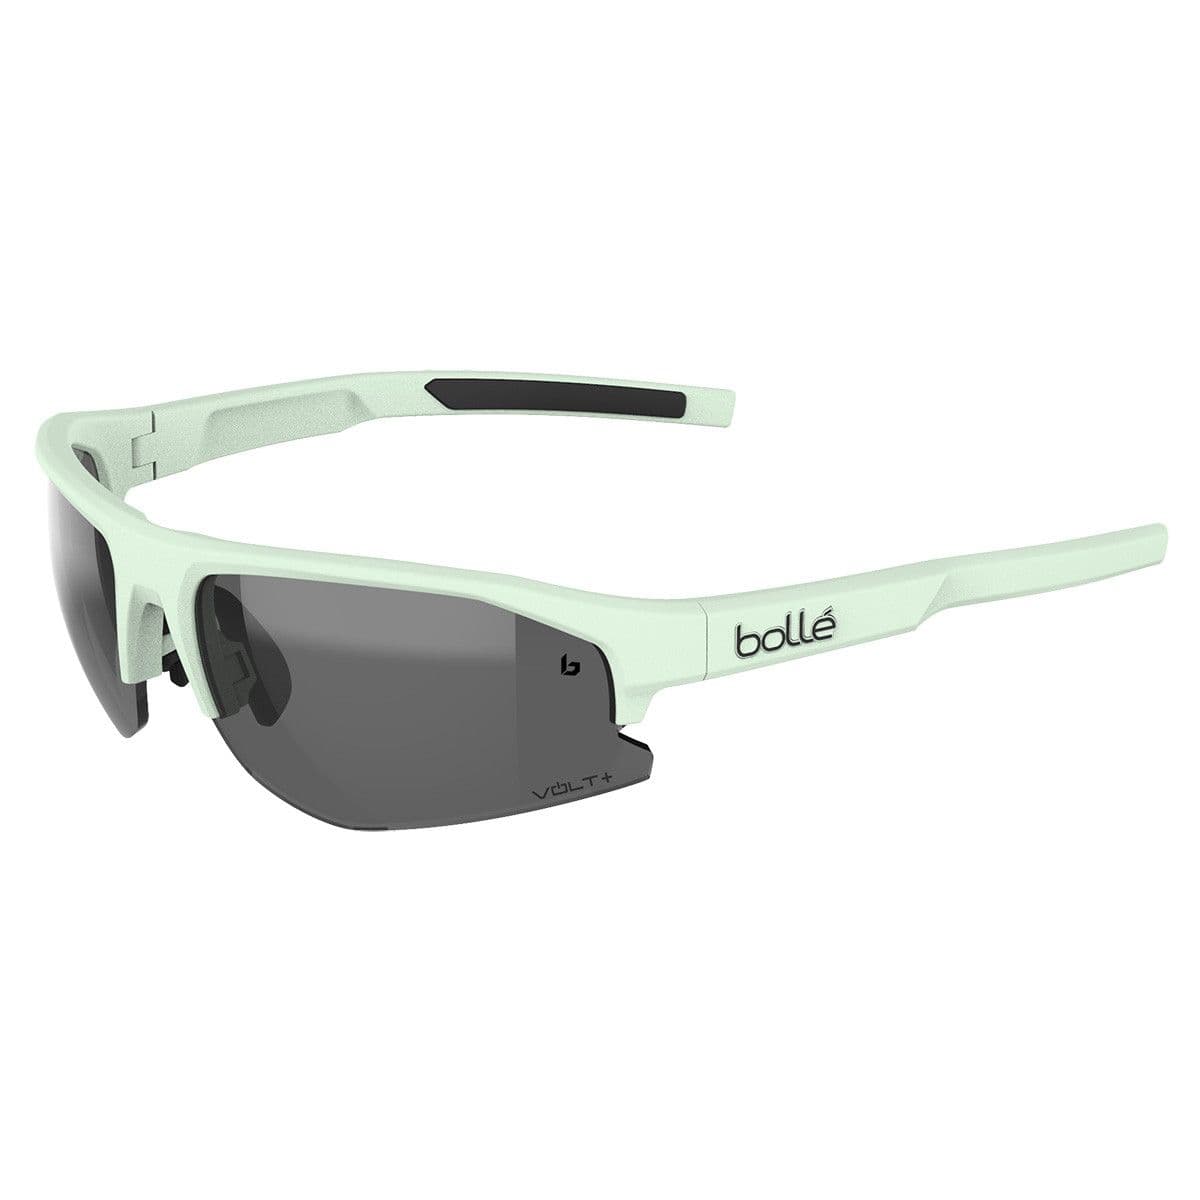 Bolle Bolt Small 2.0 Sunglasses